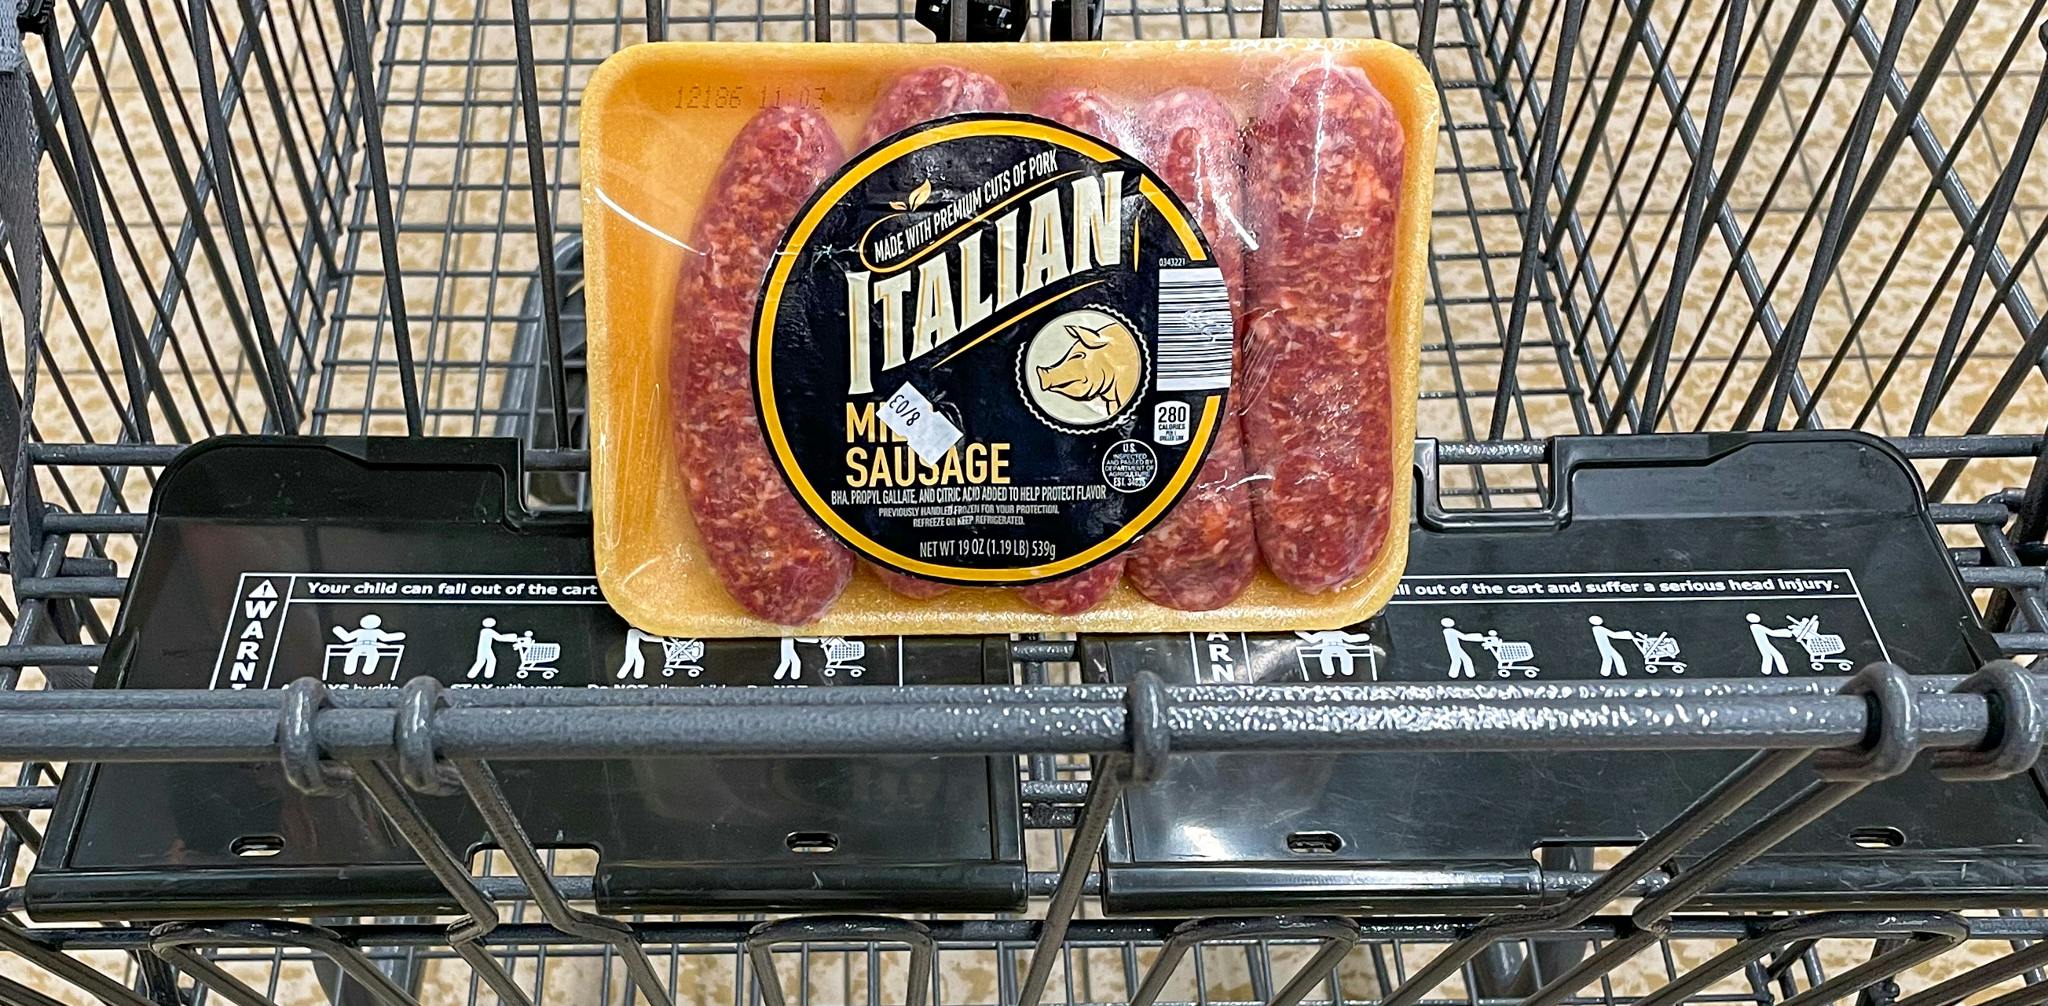 italian sausage in a cart at aldi